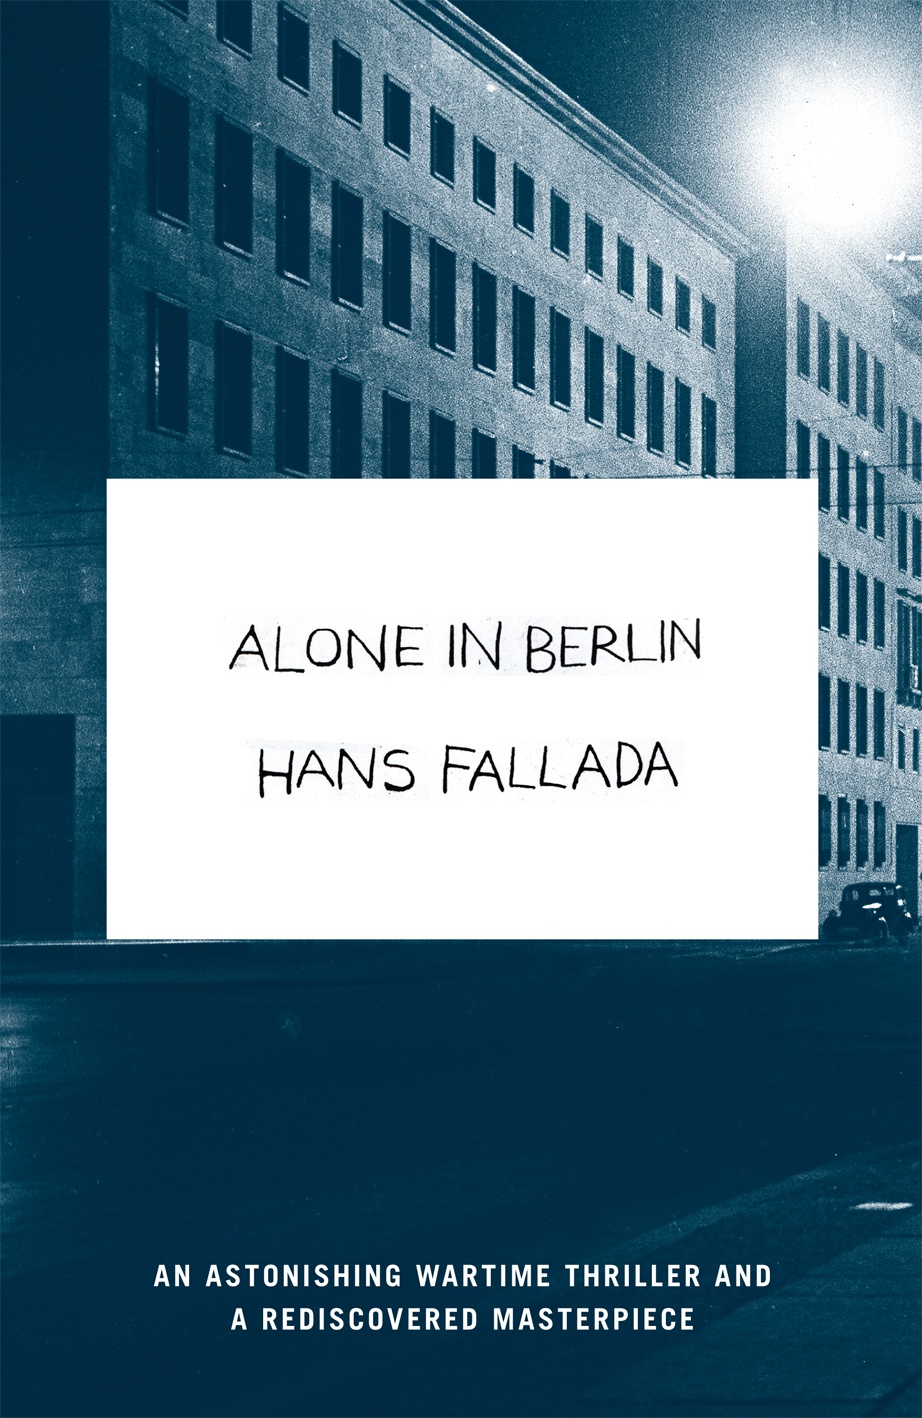 Фаллада каждый умирает в одиночку. Ханс Фаллада "один в Берлине". Один в Берлине книга. Alone in Berlin Fallada. Фаллада смерть в Берлине.